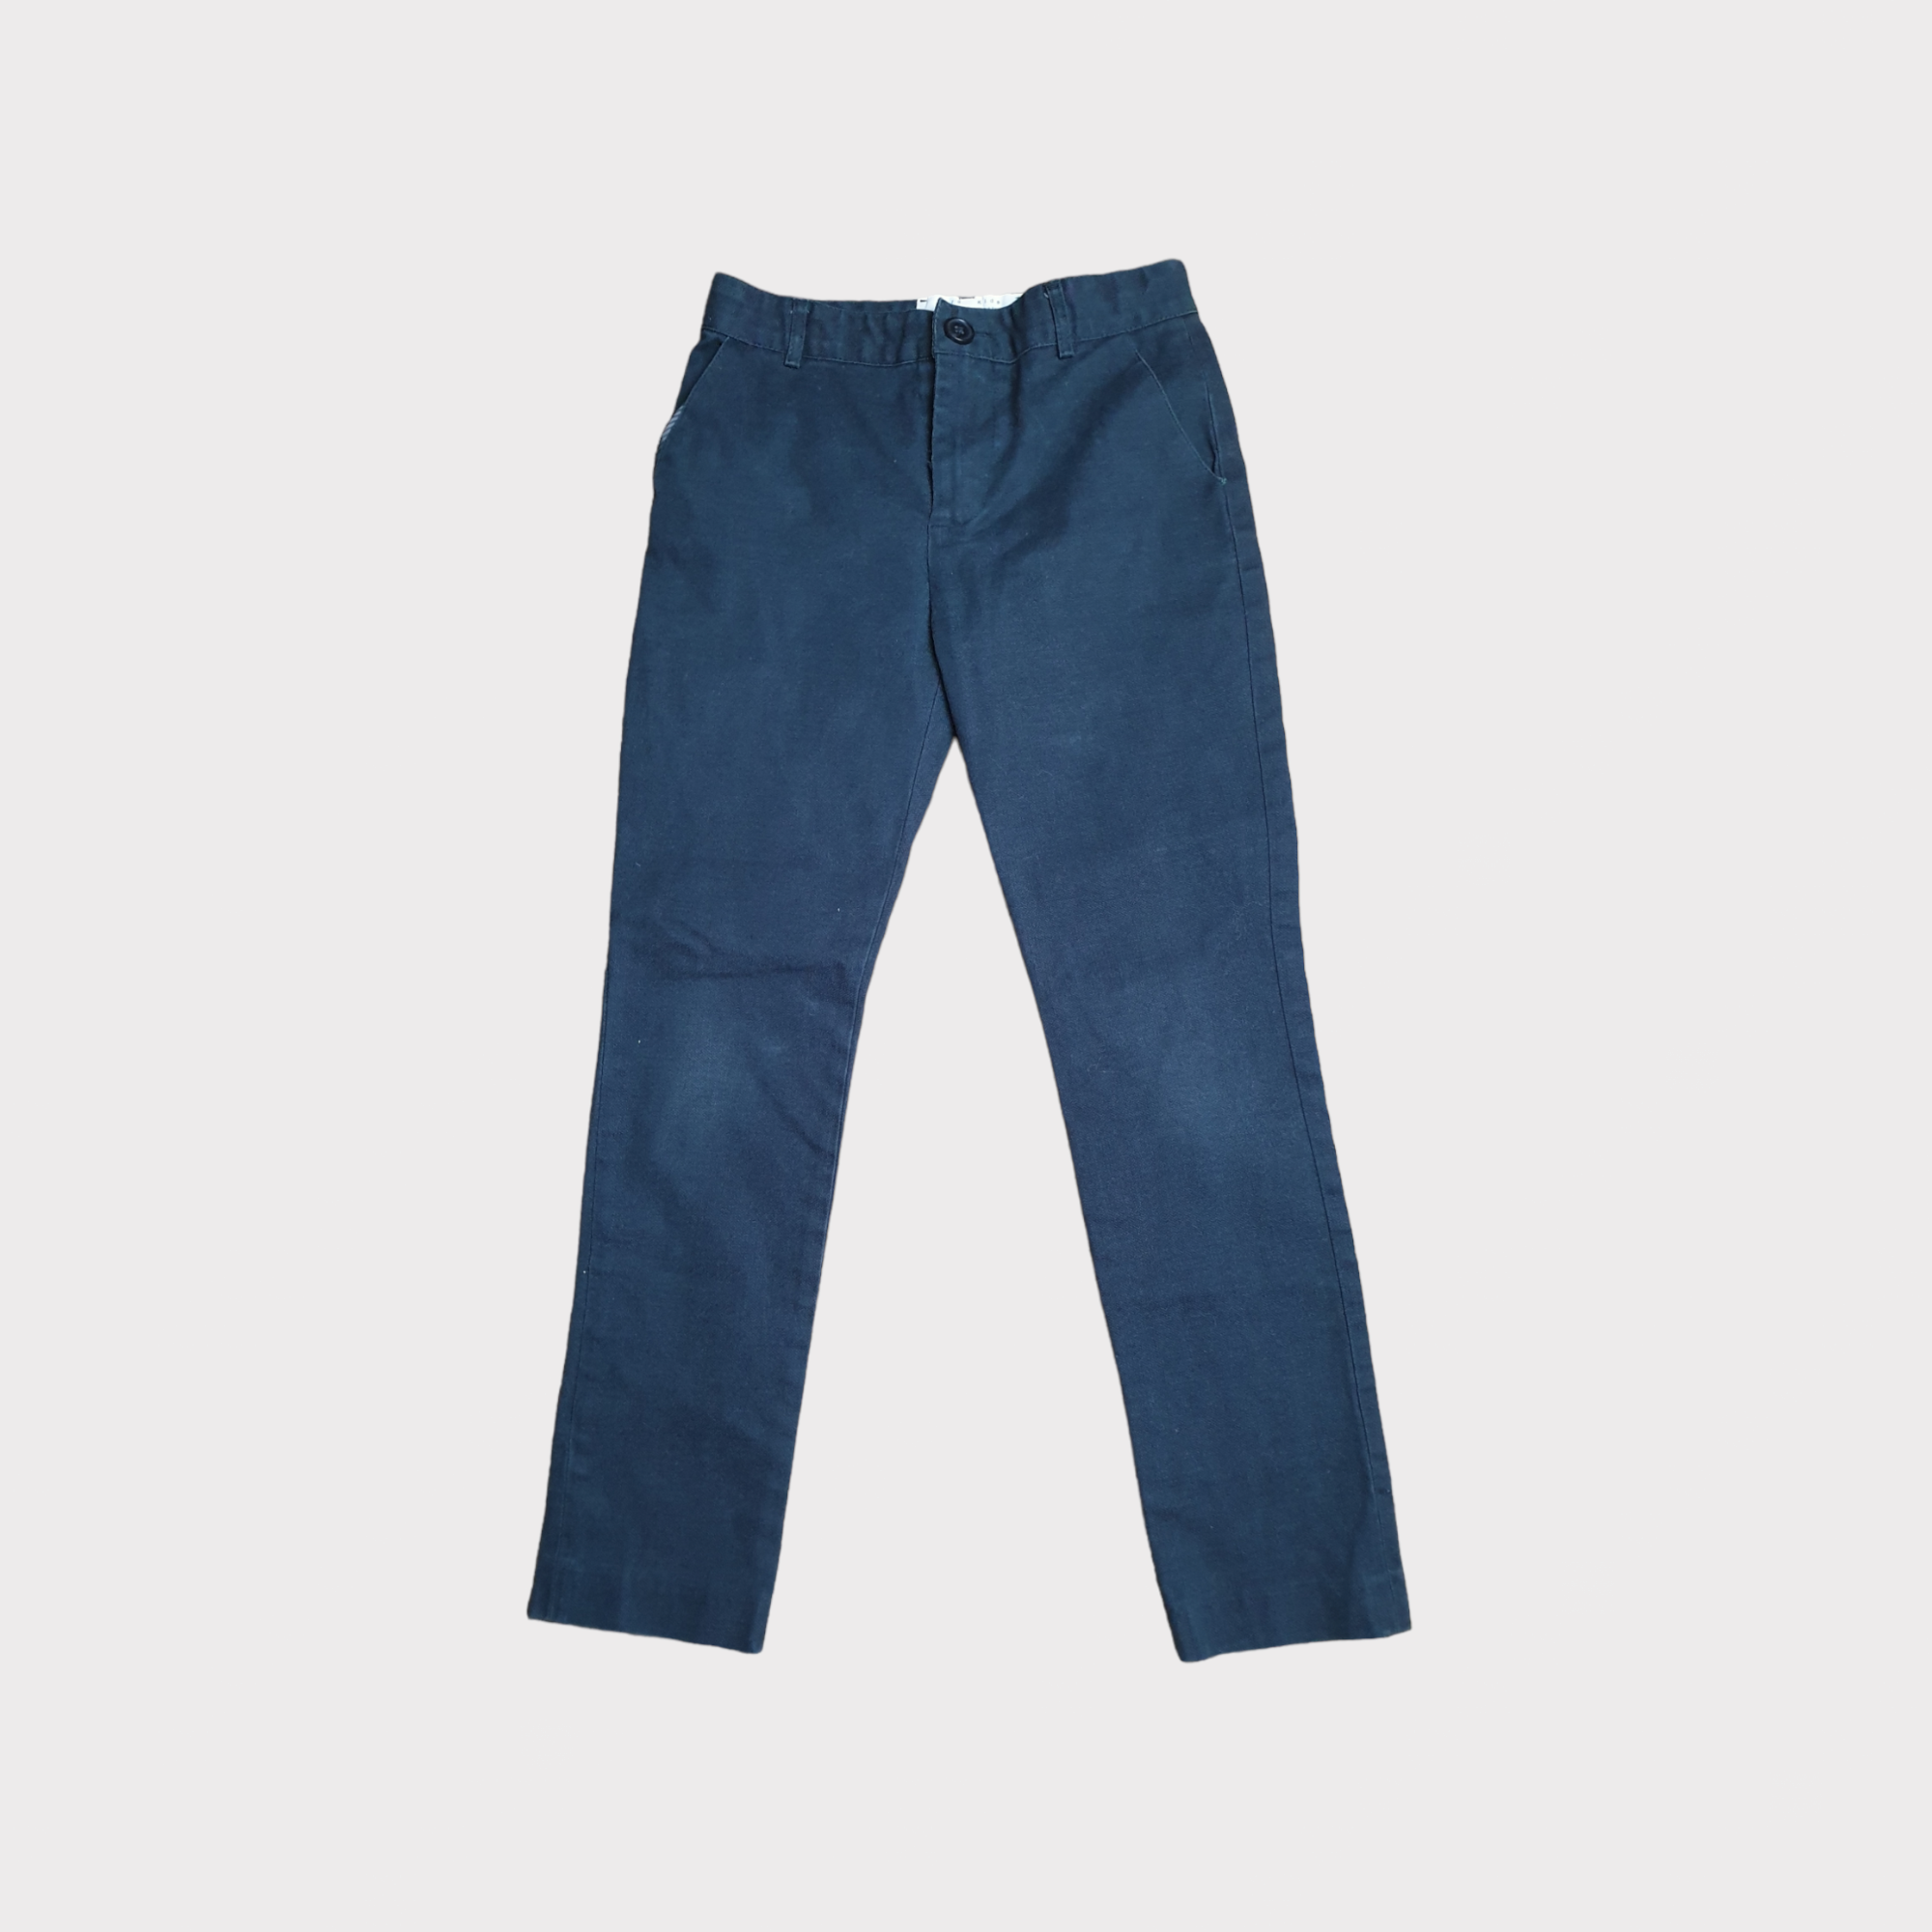 Pantalon Zara 9-10 ans 140 cm